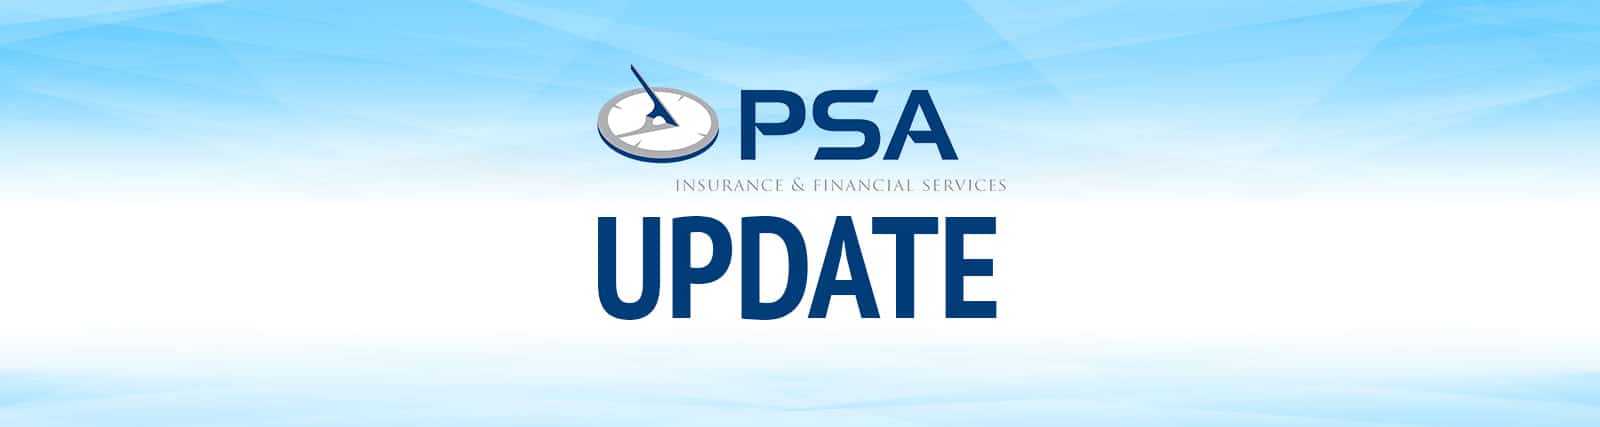 PSA Update image on PSA Financial's website